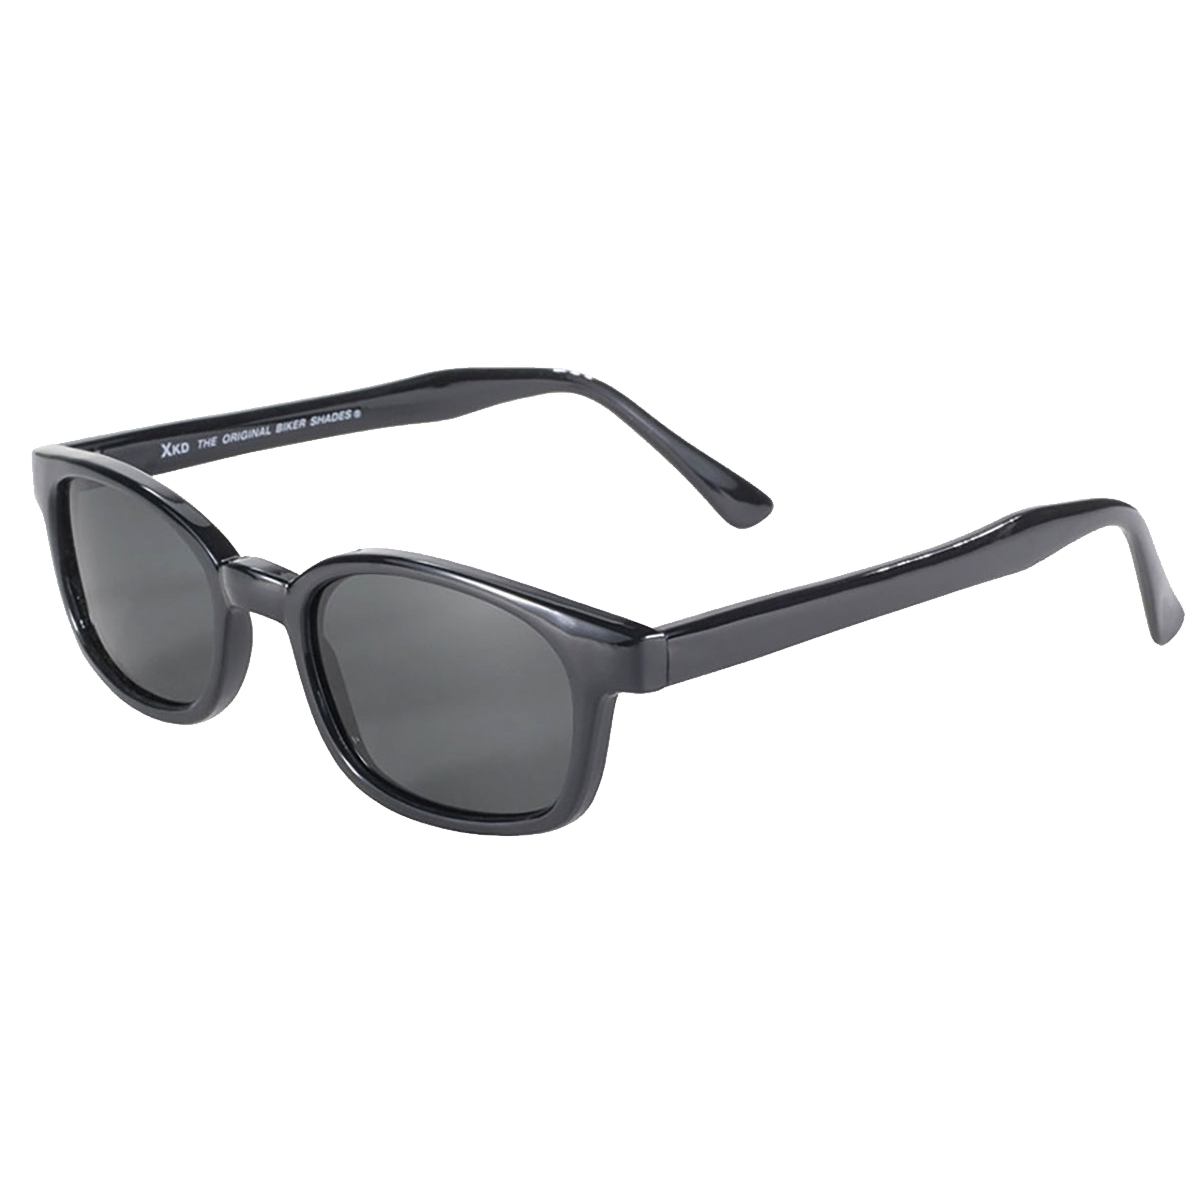 X-KD's 1019 - Dark gray polarized lenses - Sunglasses